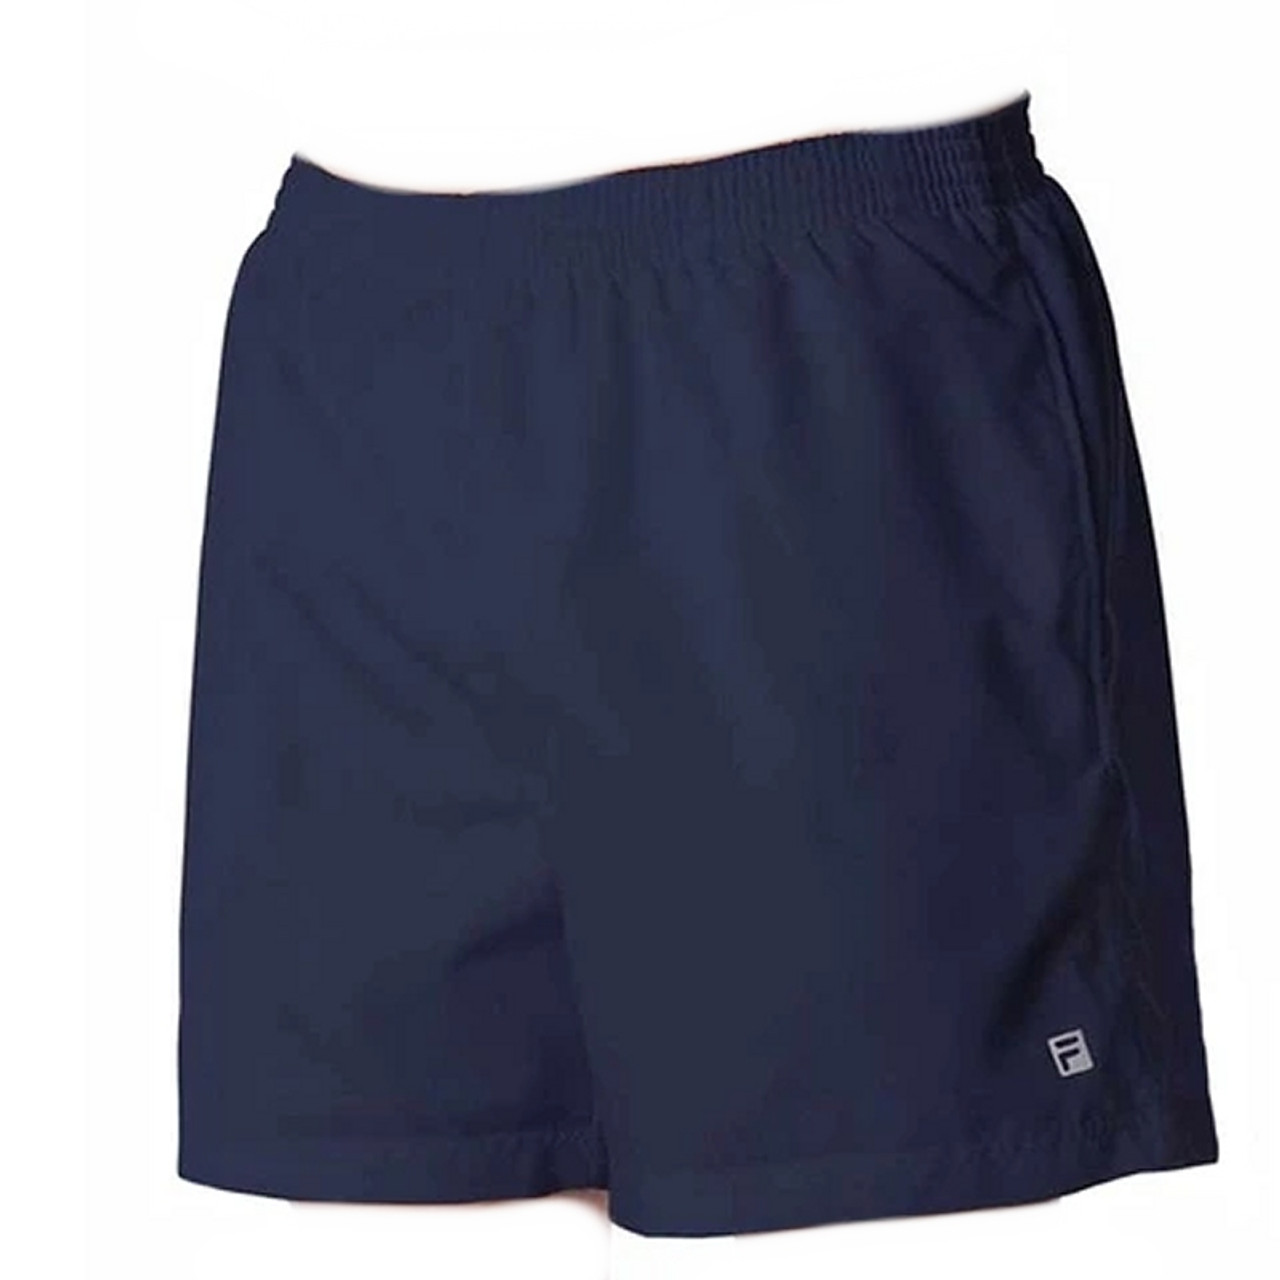 Fila Sport Perform Boys short With pockets & elastic waist & draw String  Size:S